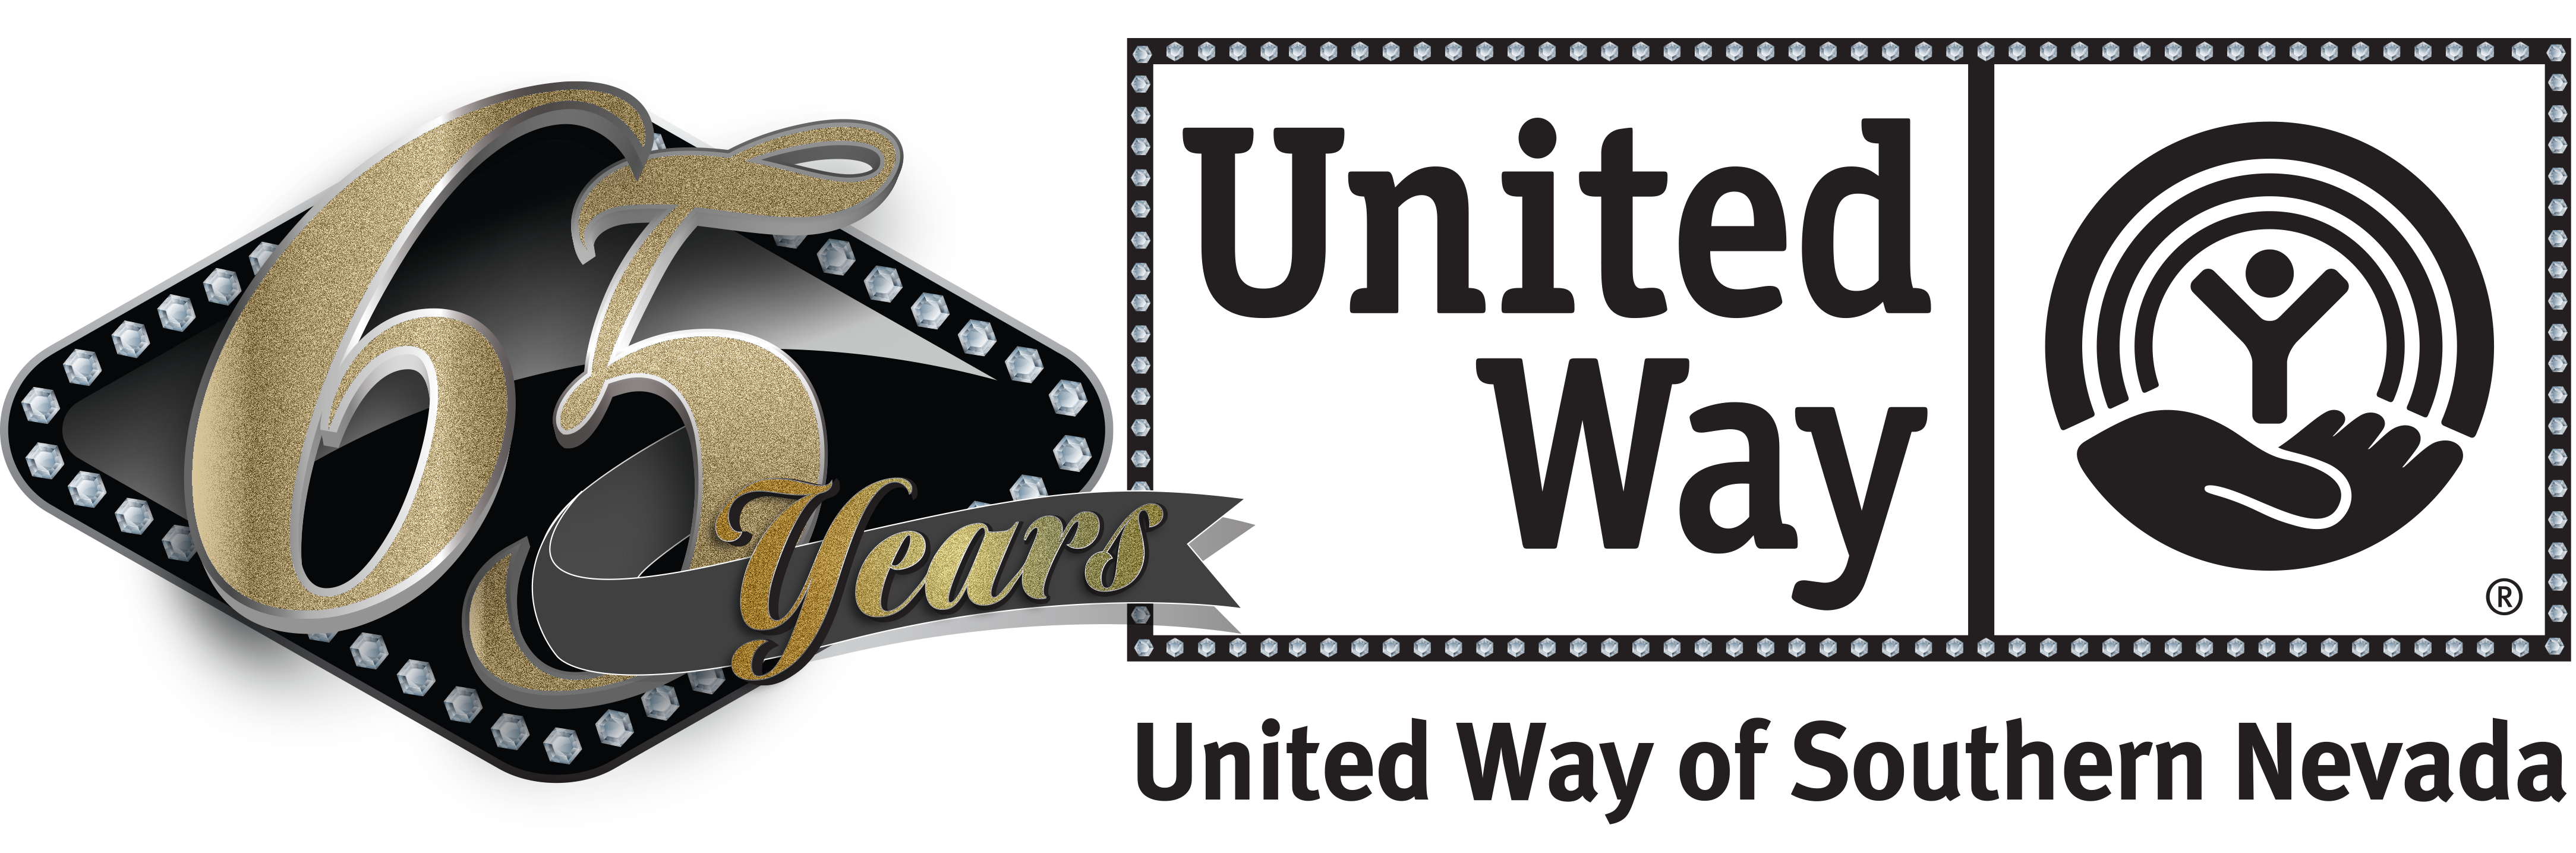 uwsn logo1 2